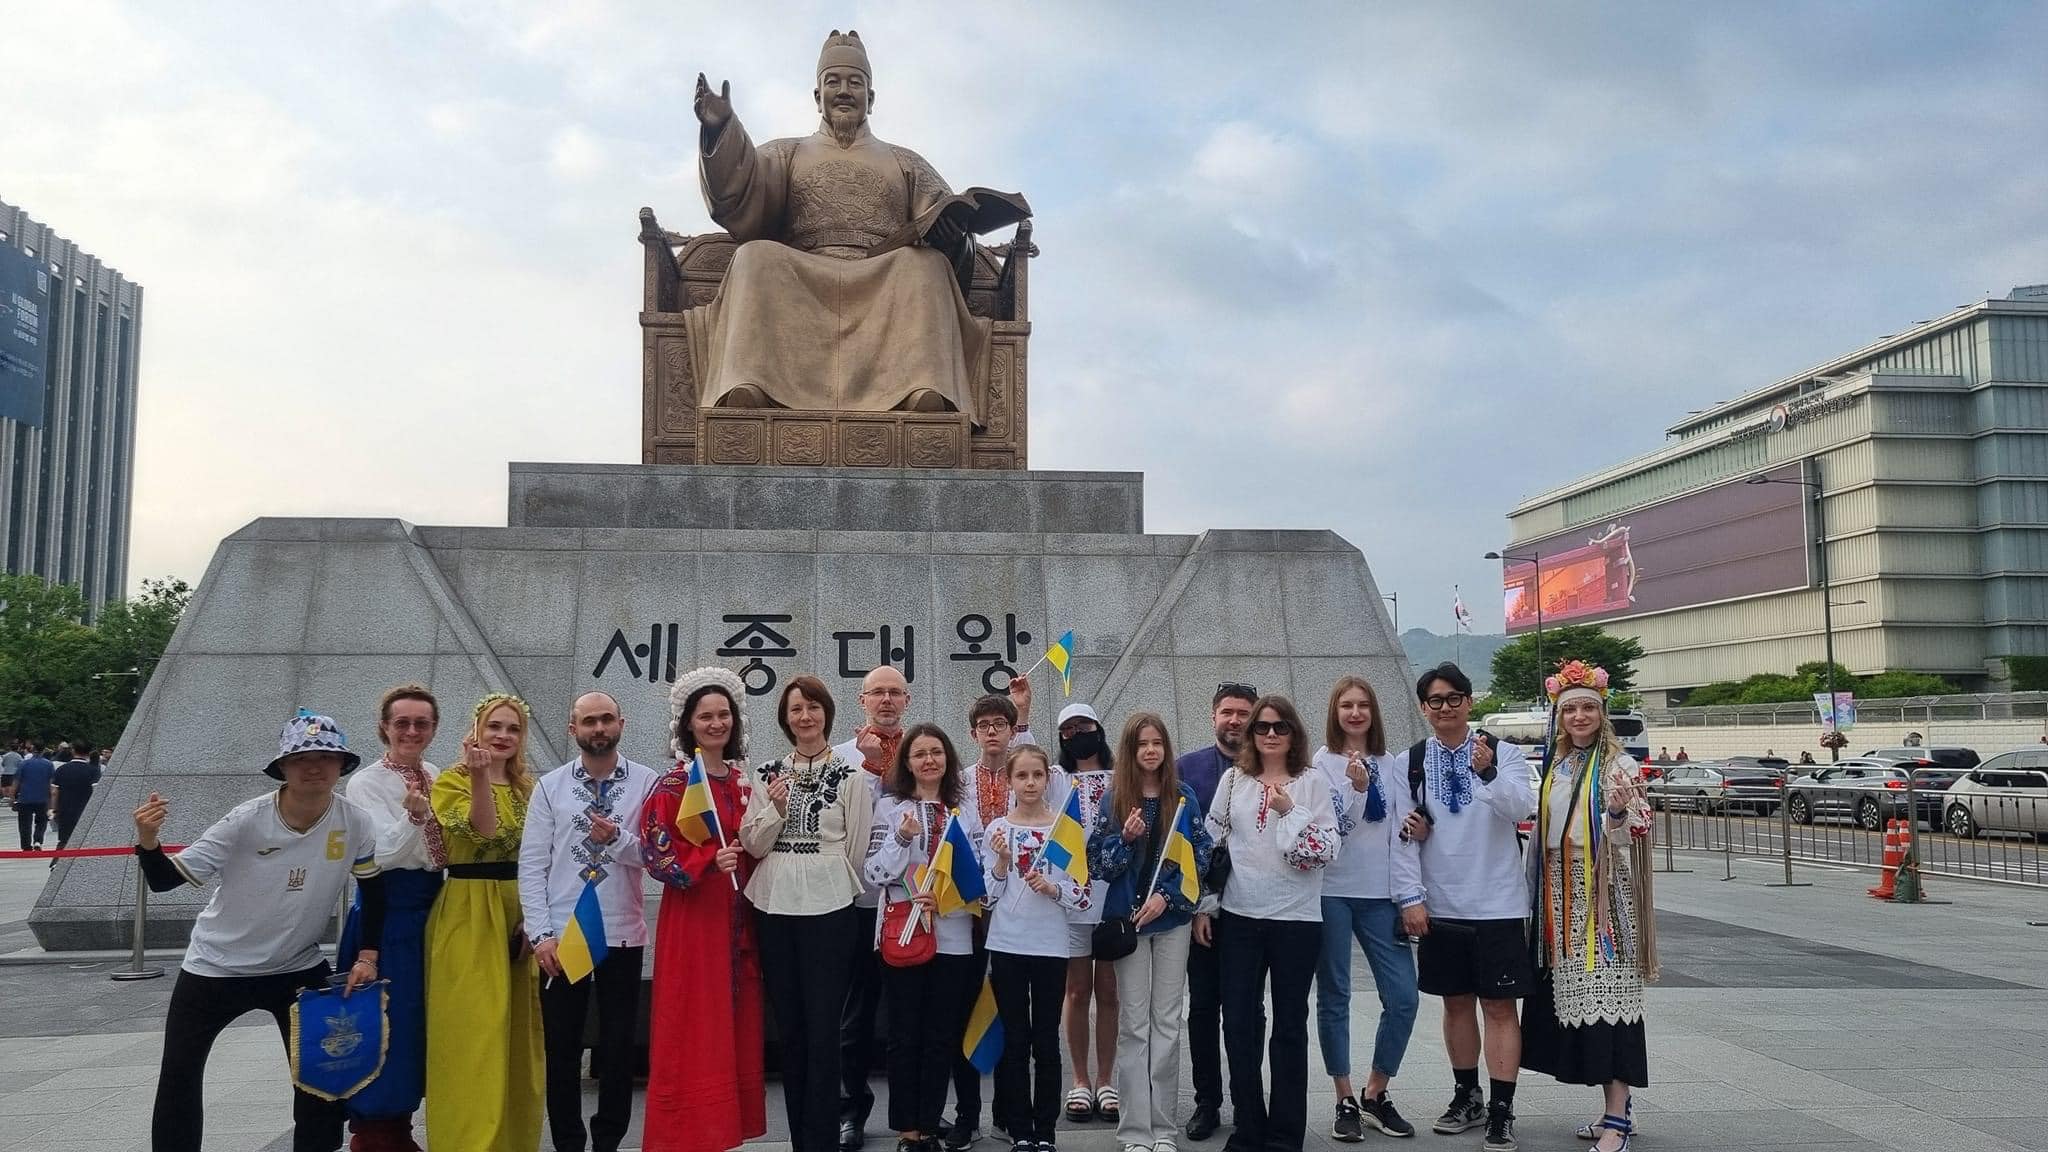 Ukraine was represented at the Seoul Friendship Festival